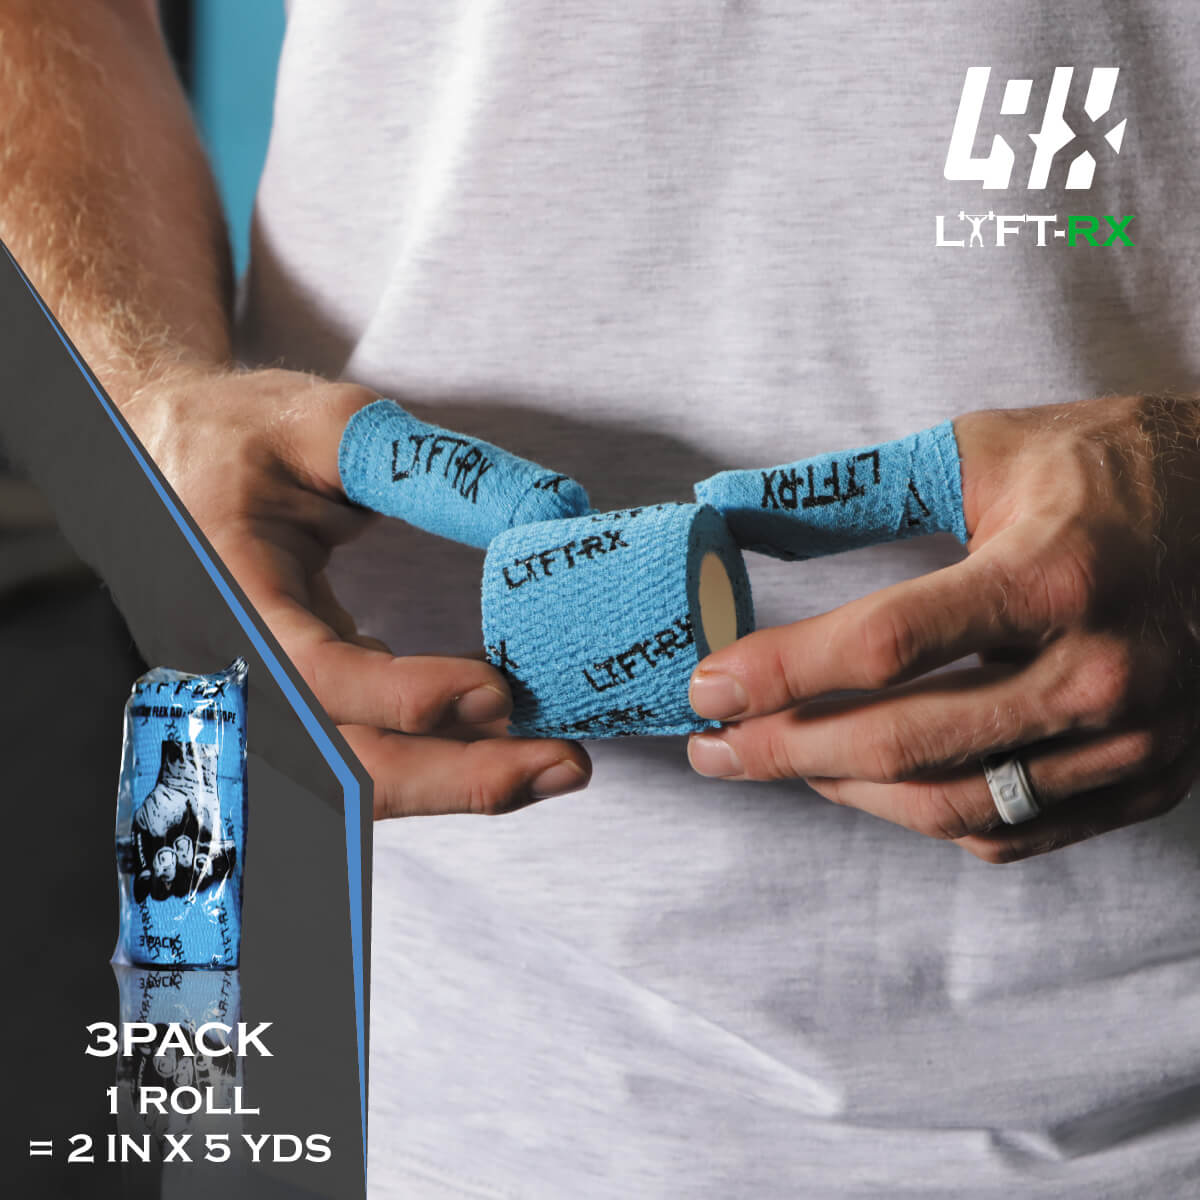 LYFT-RX Weightlifting Hook Grip Tape